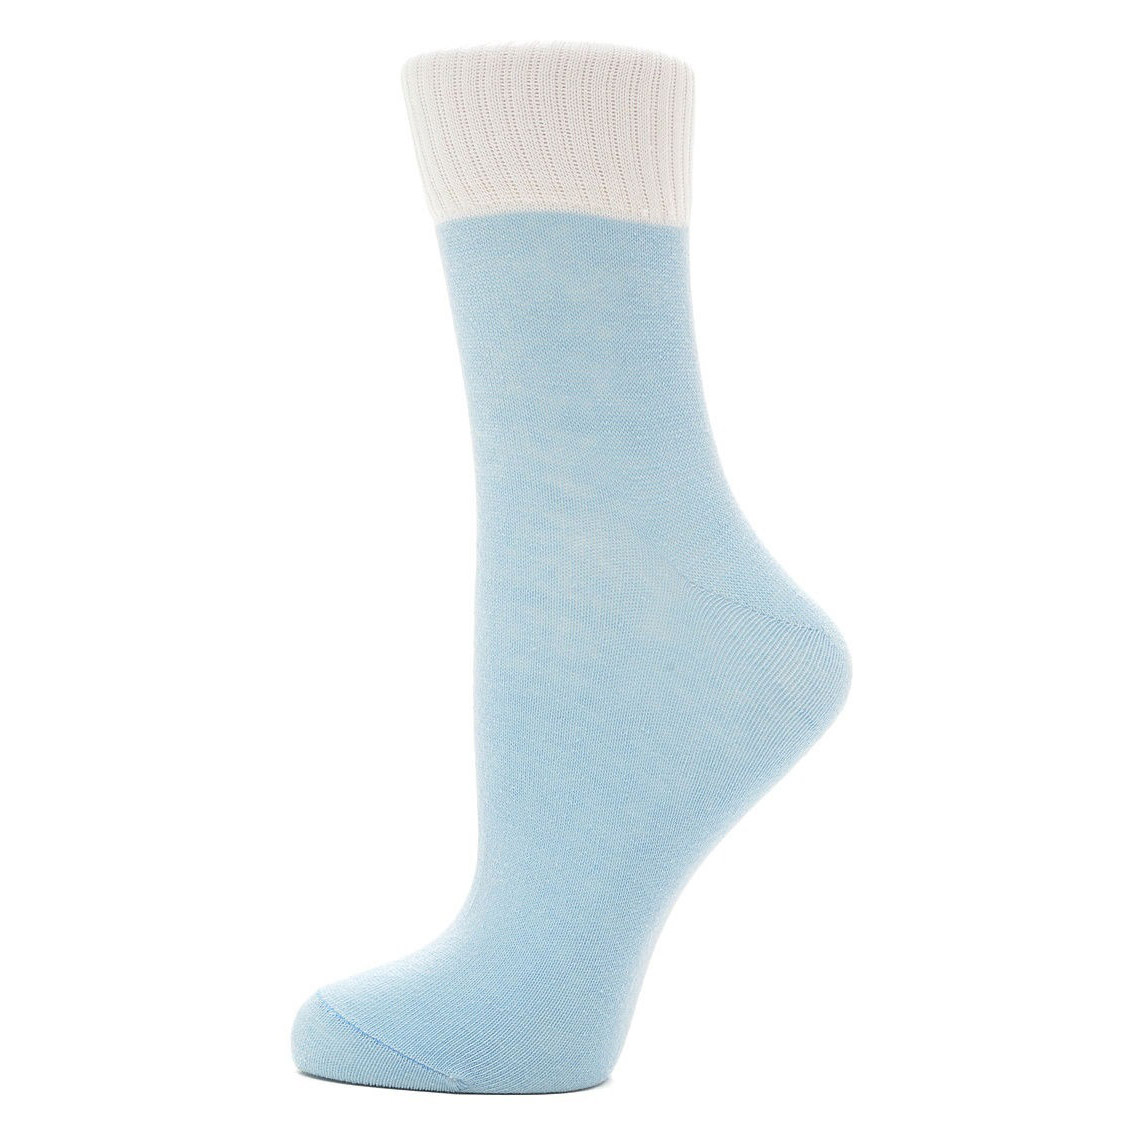 Носки Karmen Calza Look sky blu M 38-40, цвет голубой, размер 38-40 - фото 1